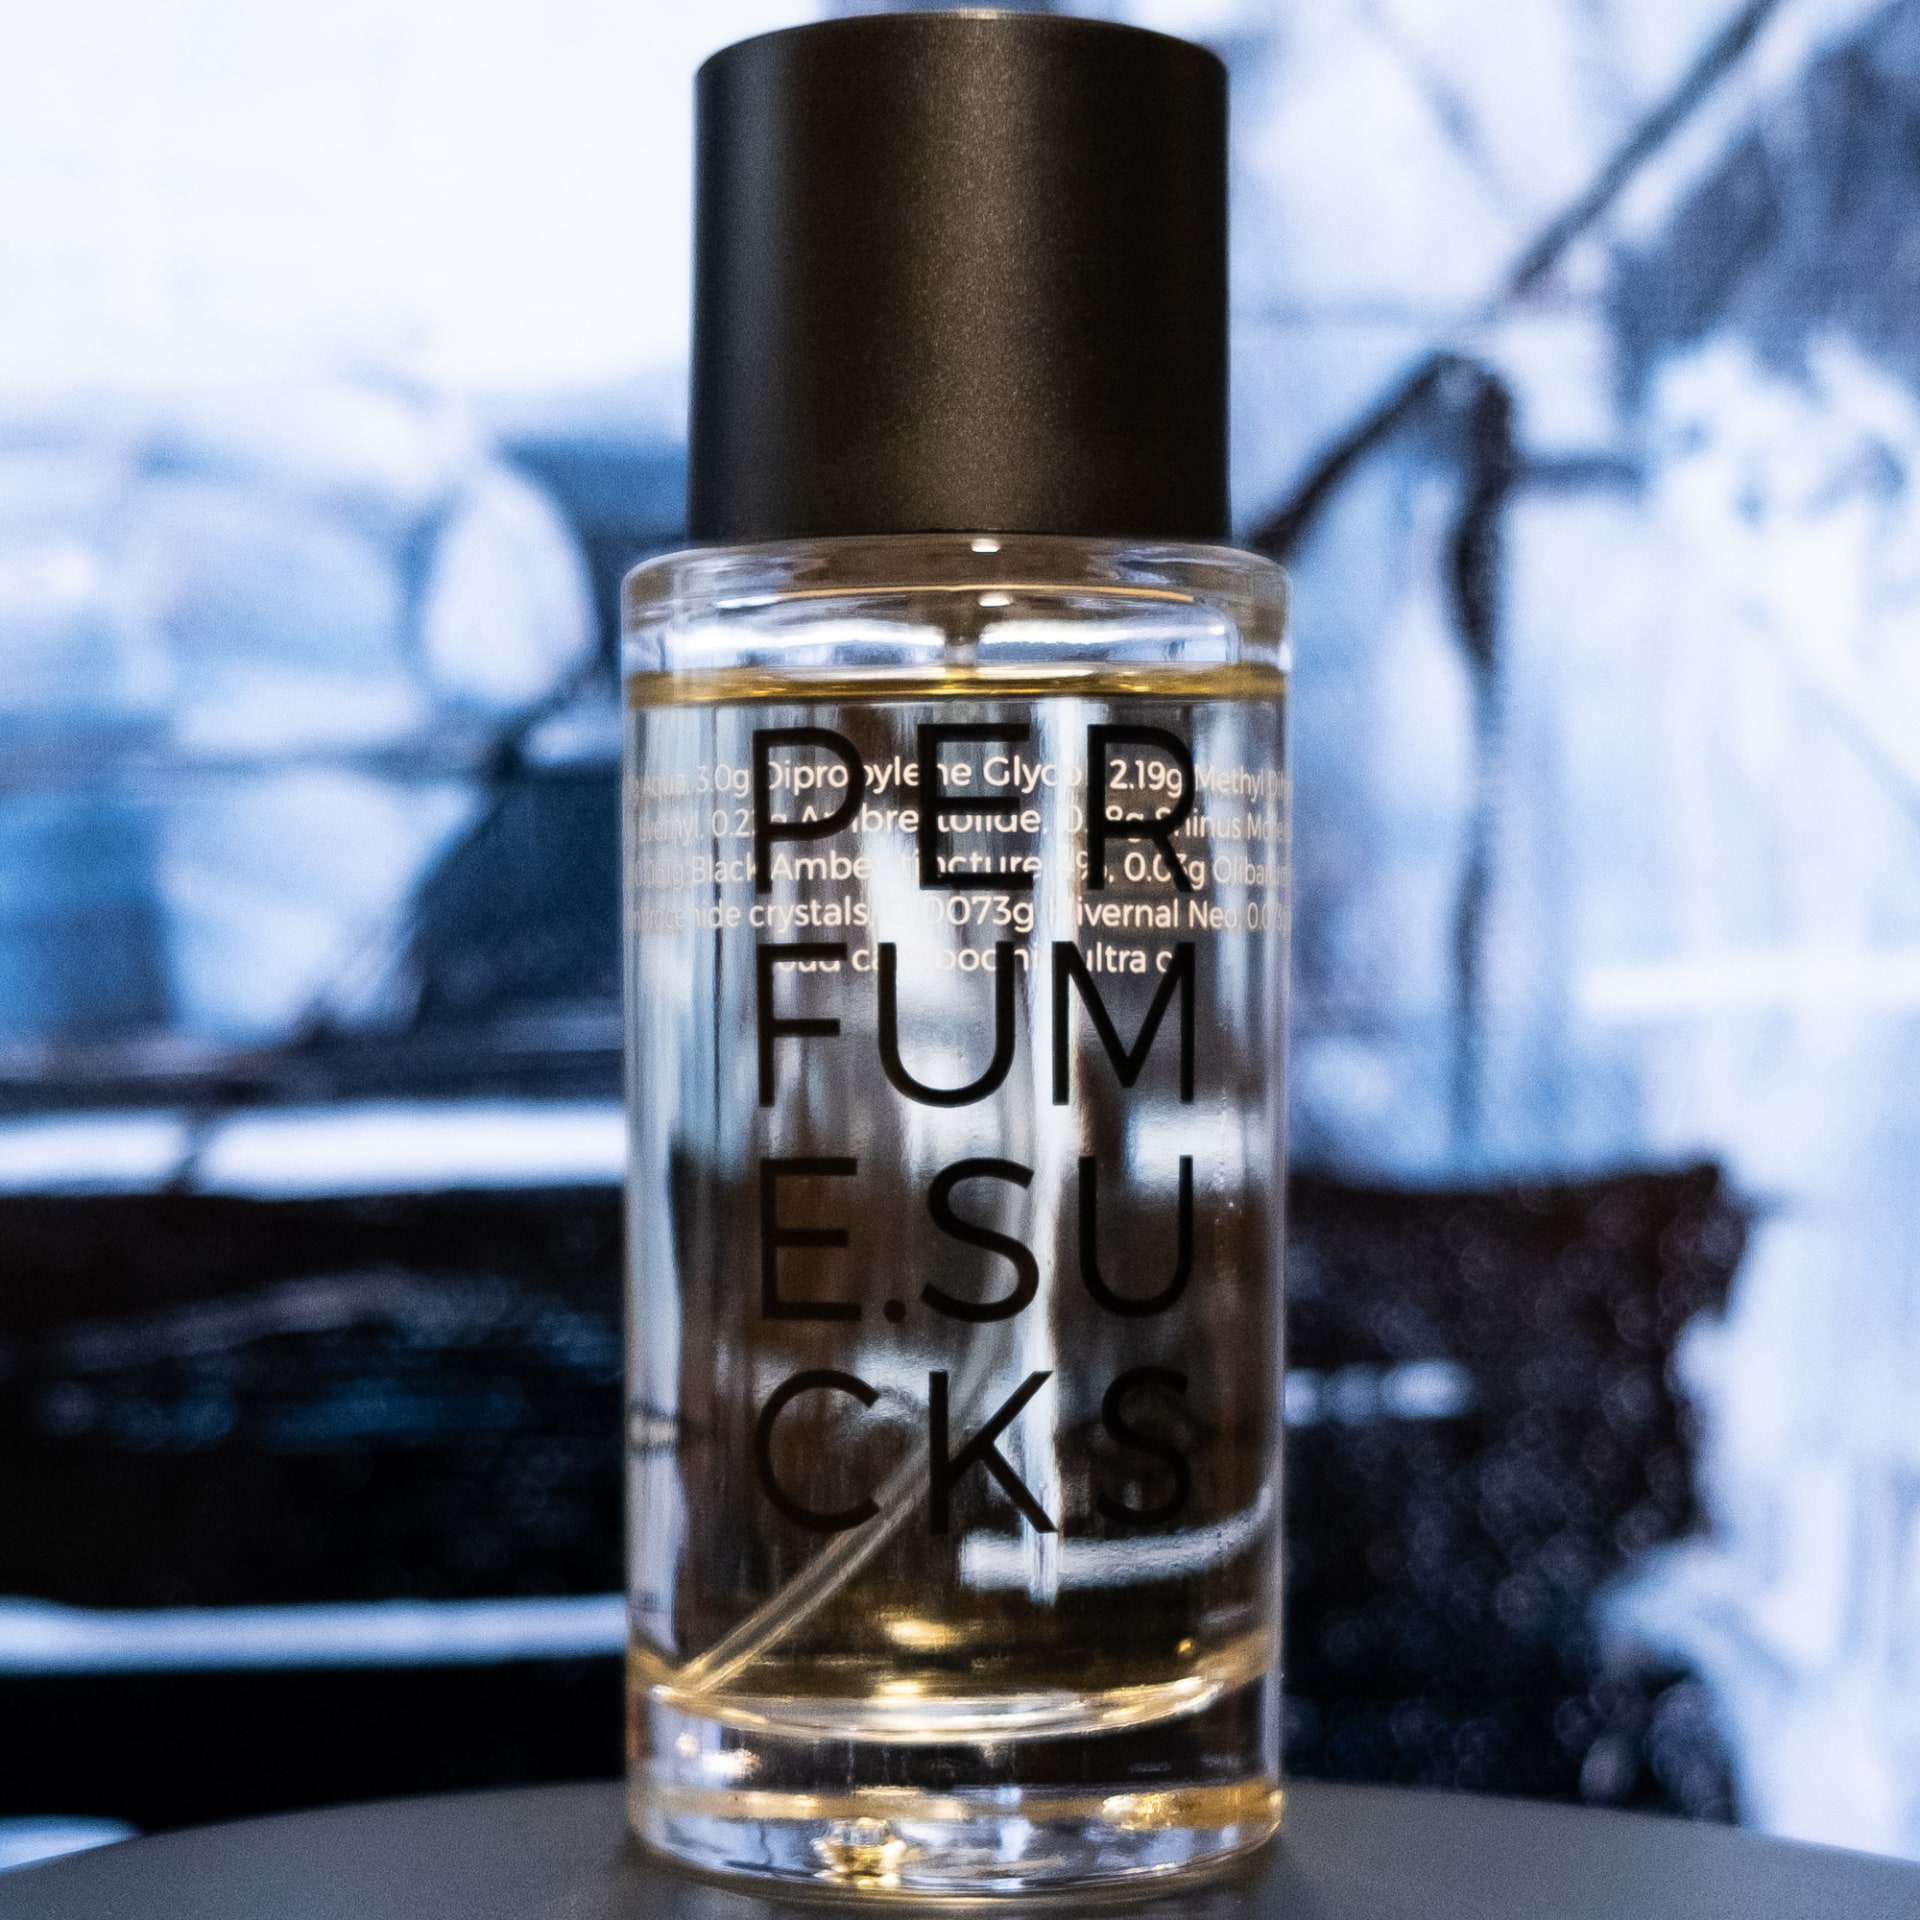 Perfume.Sucks Black